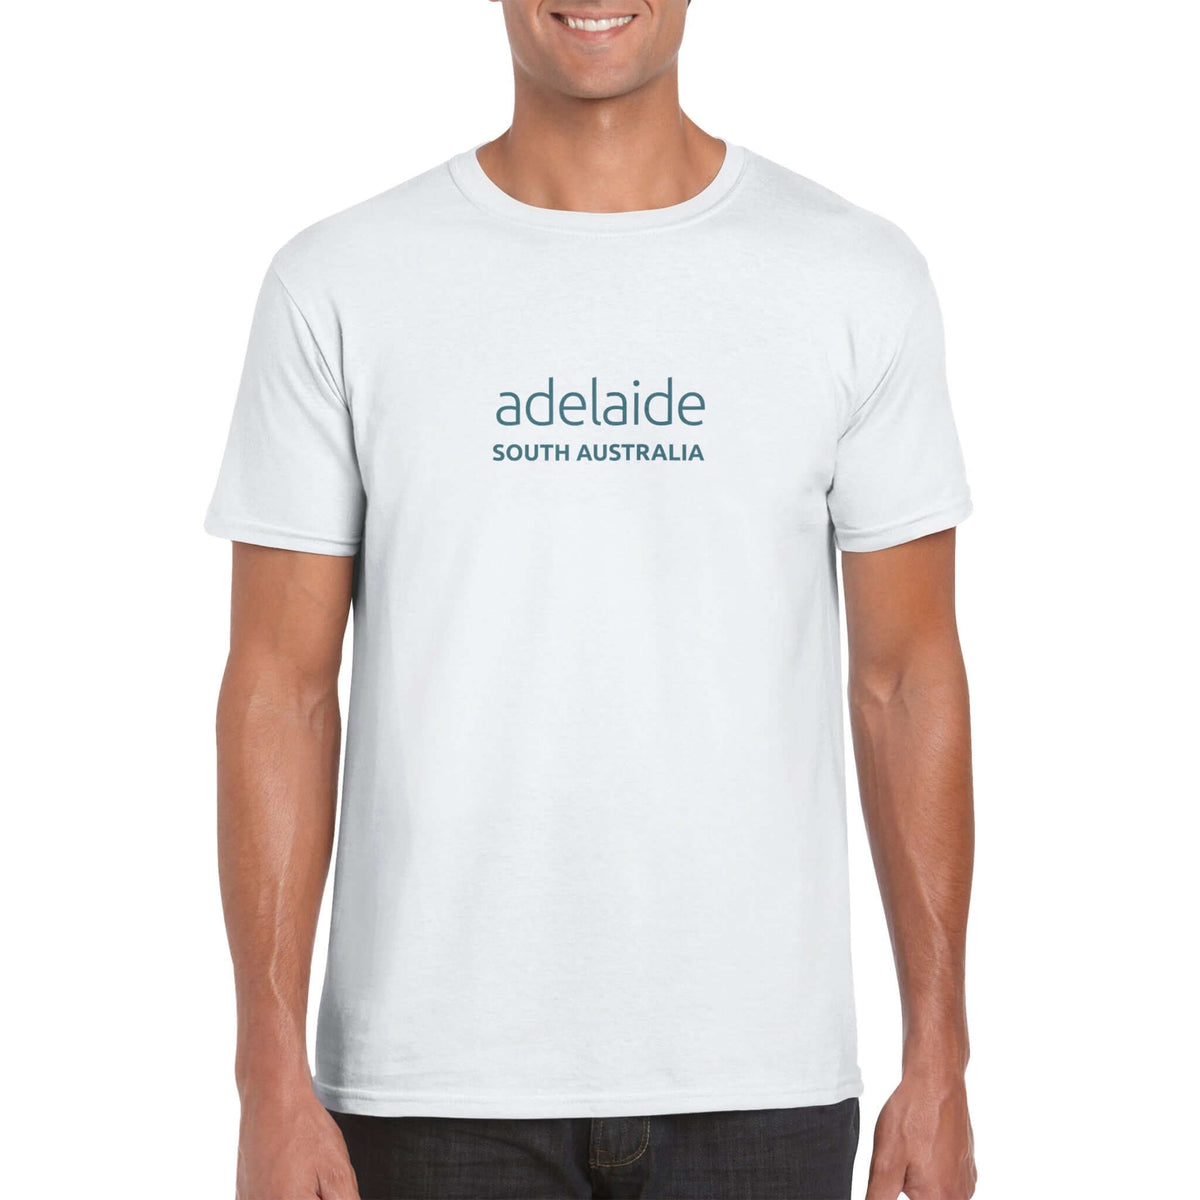 Mens Adelaide South Australia white t shirt - MangoBap